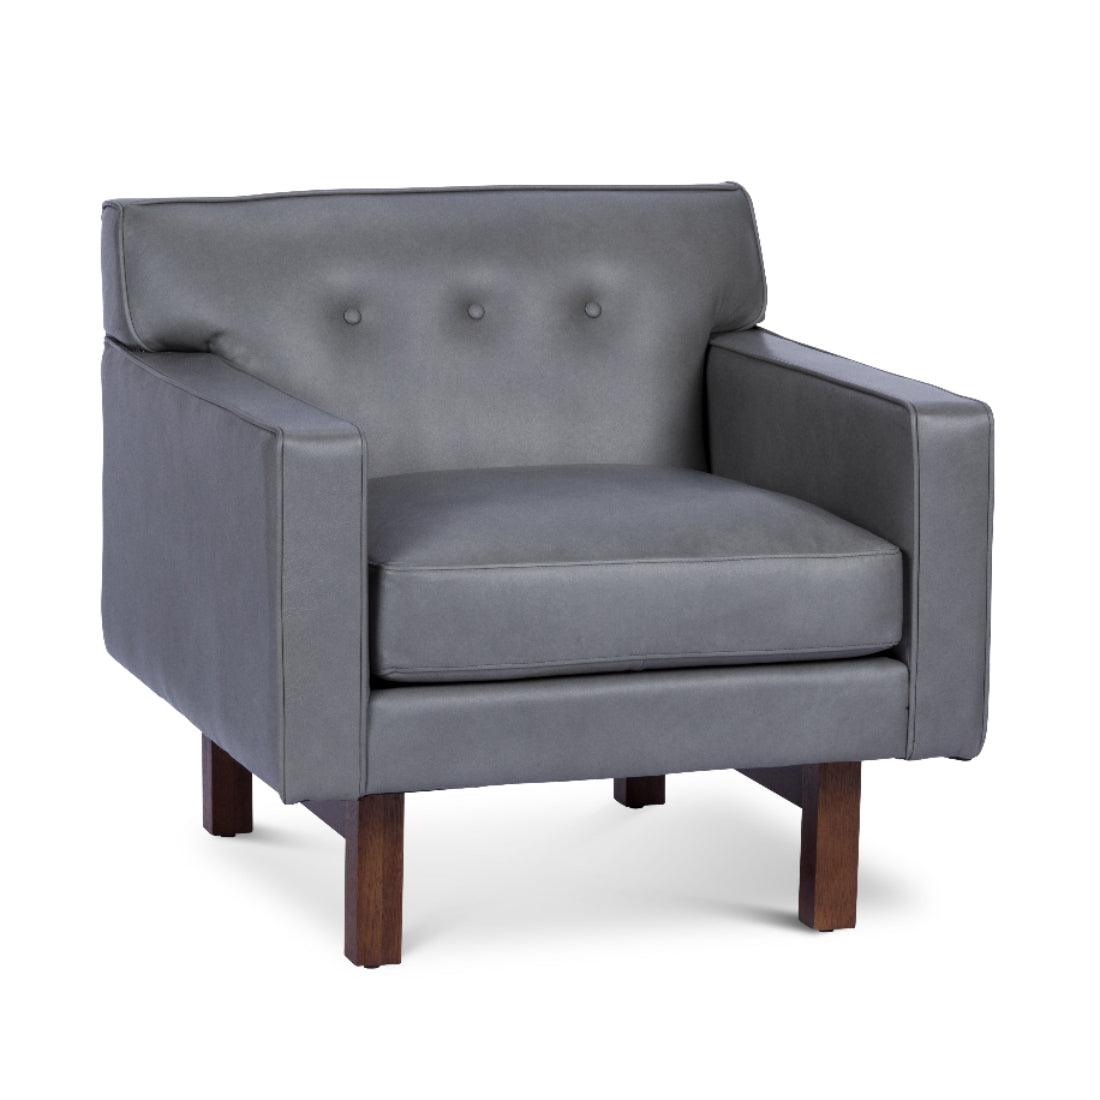 Midcentury Rehder Top Grain Leather Club Chair for Living Room - Uptown Sebastian